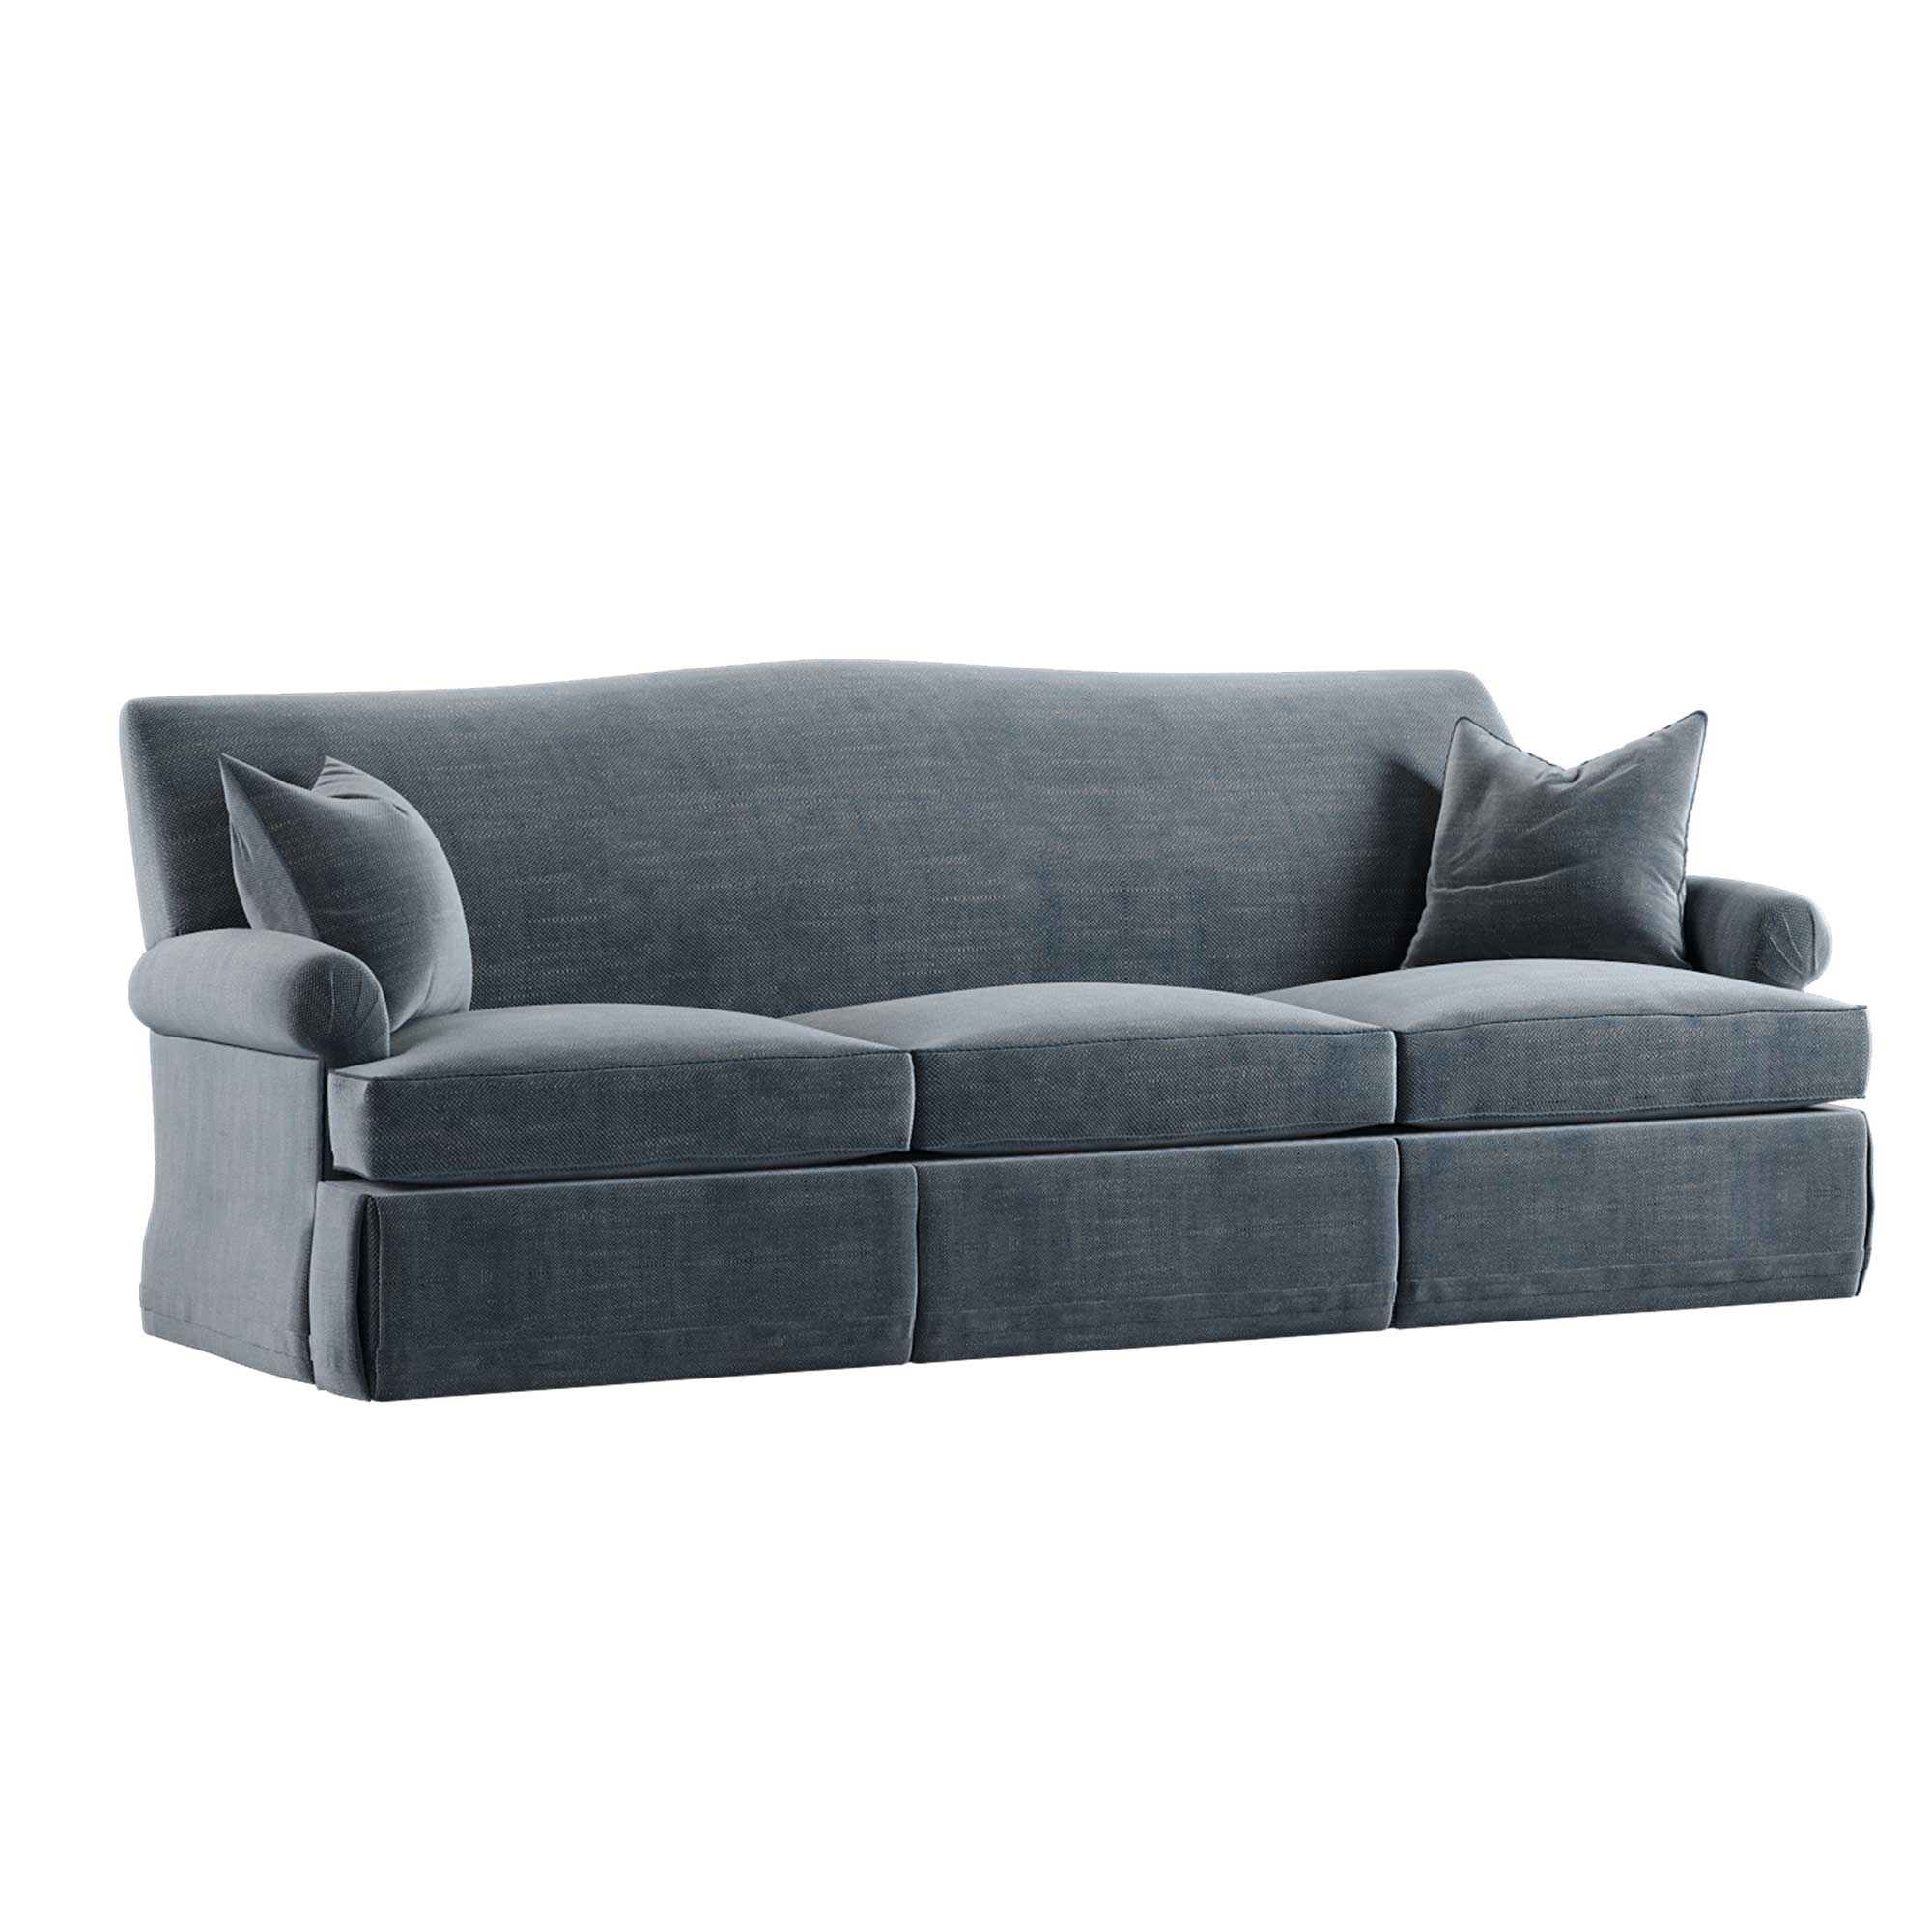 Denim Tufted Sofa – Daly House Lifestyle Homewares